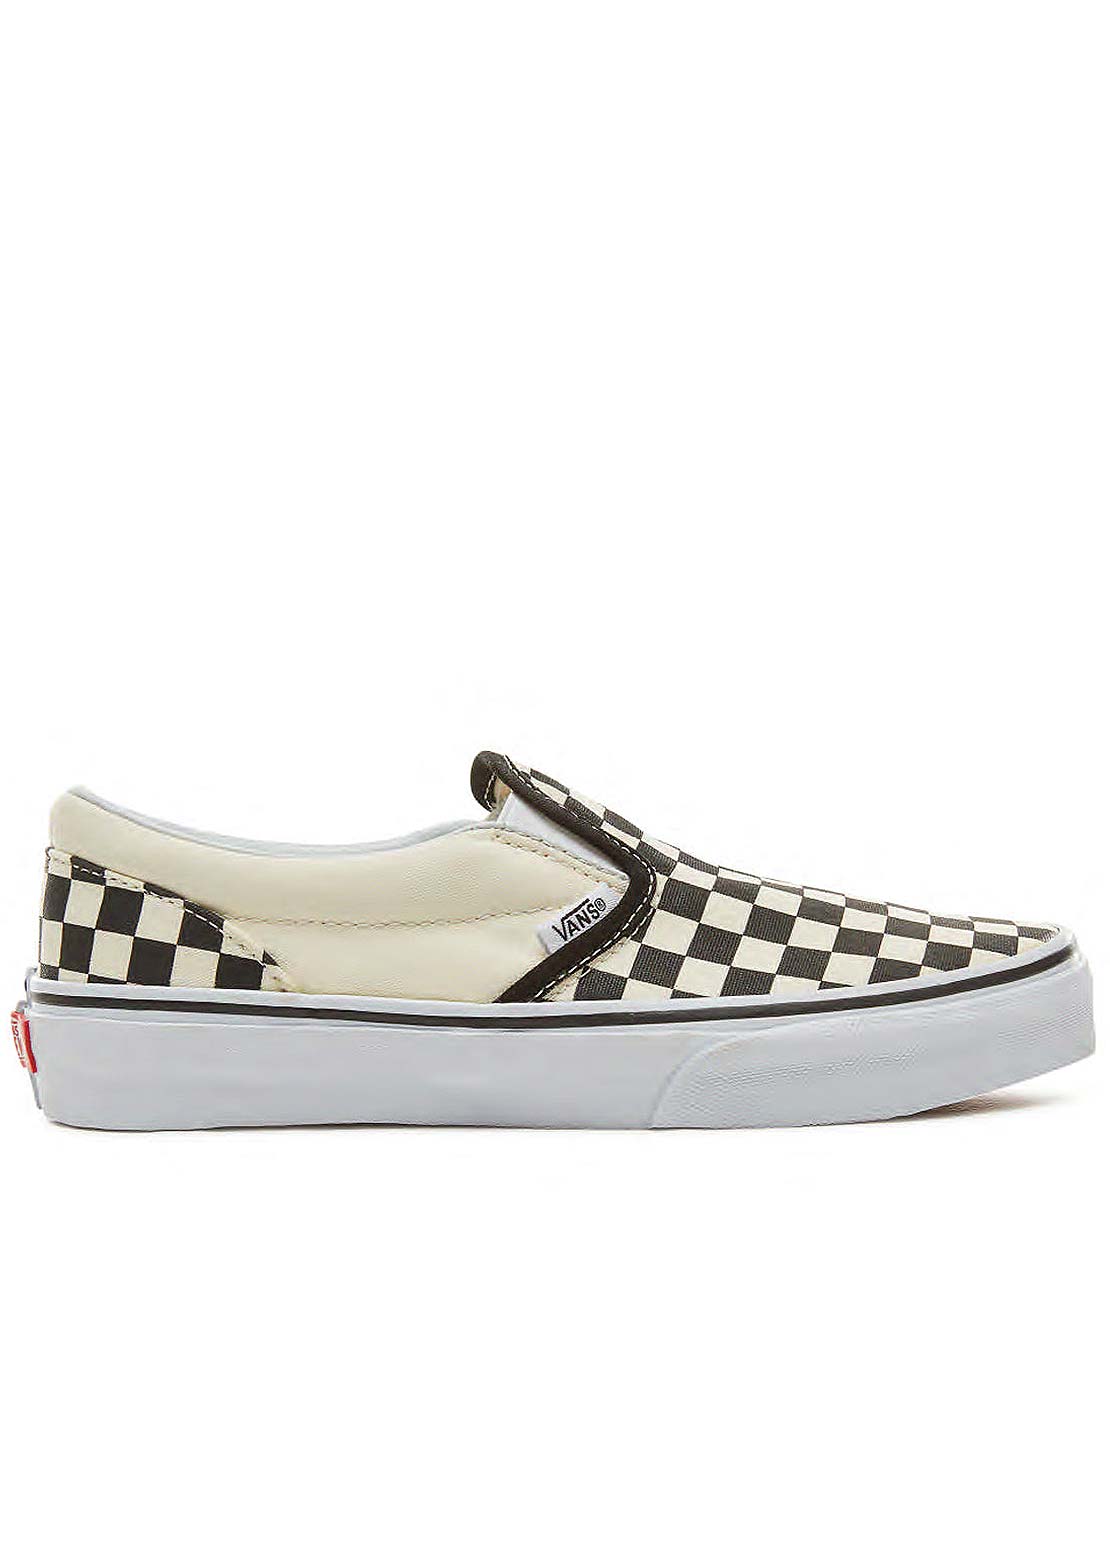 Vans Junior Classic Slip-On Shoes (Checkerboard) Black/White